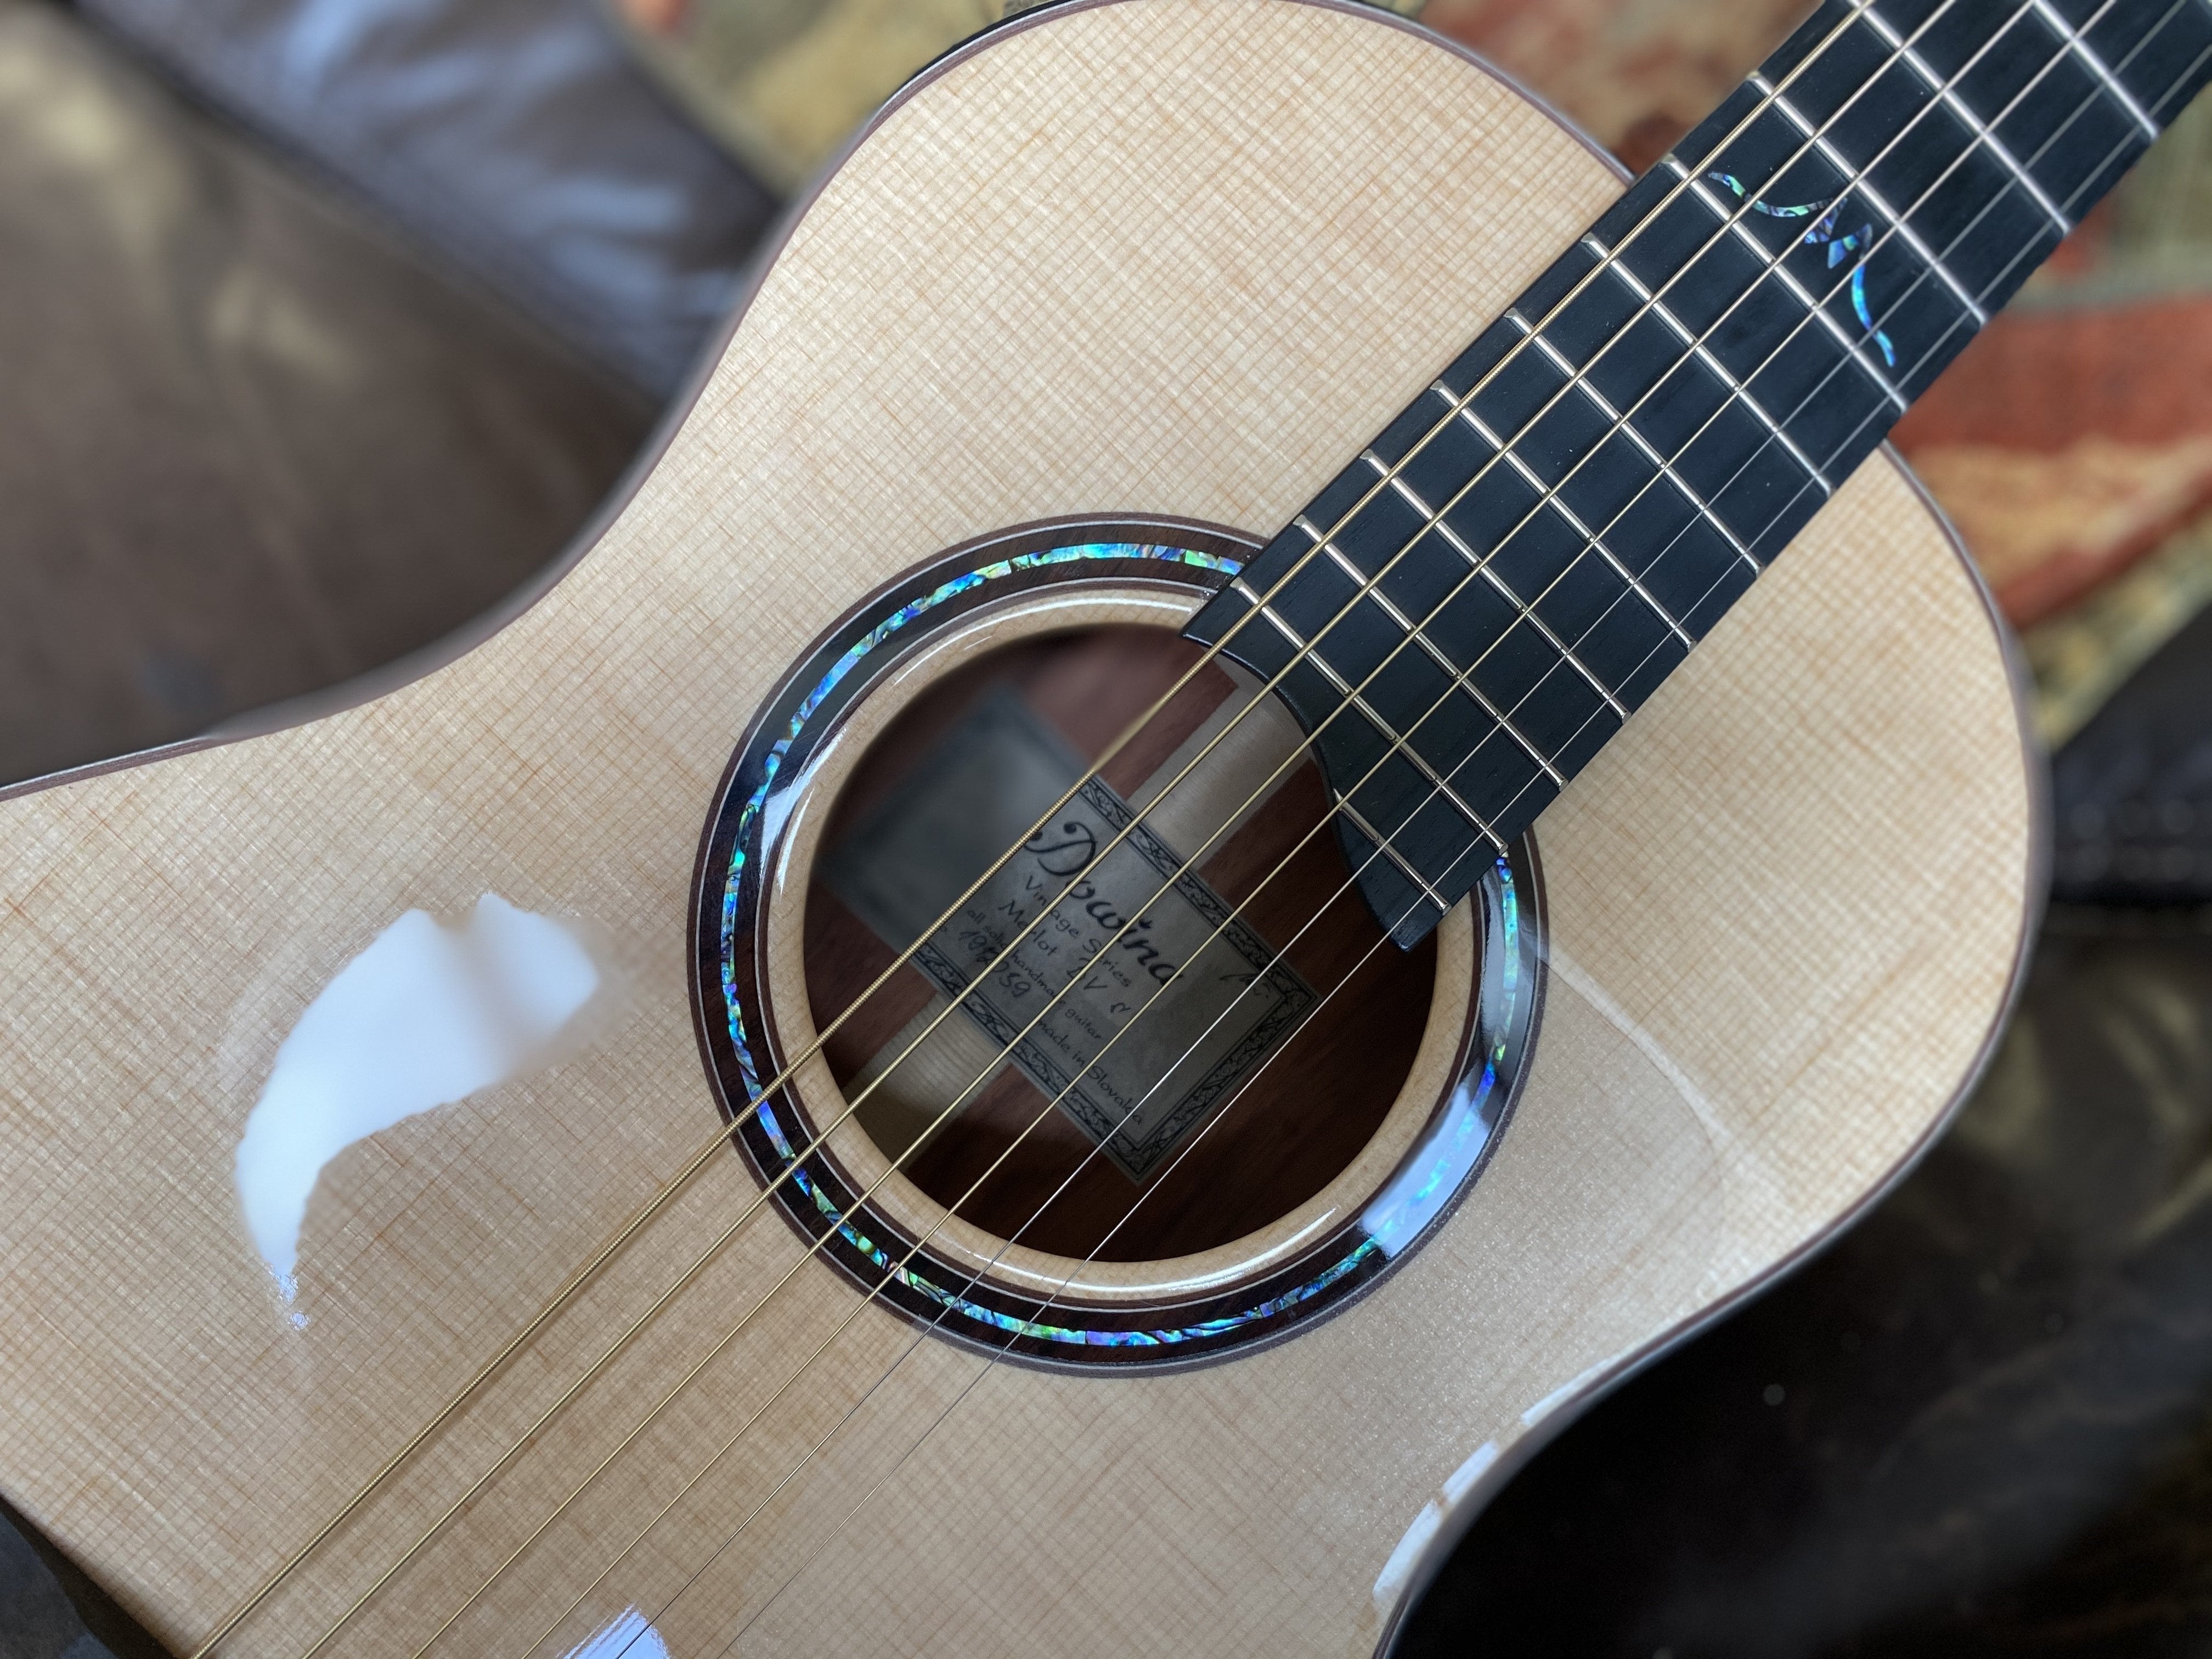 Dowina Merlot BV Spruce / Macacauba Parlor Guitar, Acoustic Guitar for sale at Richards Guitars.